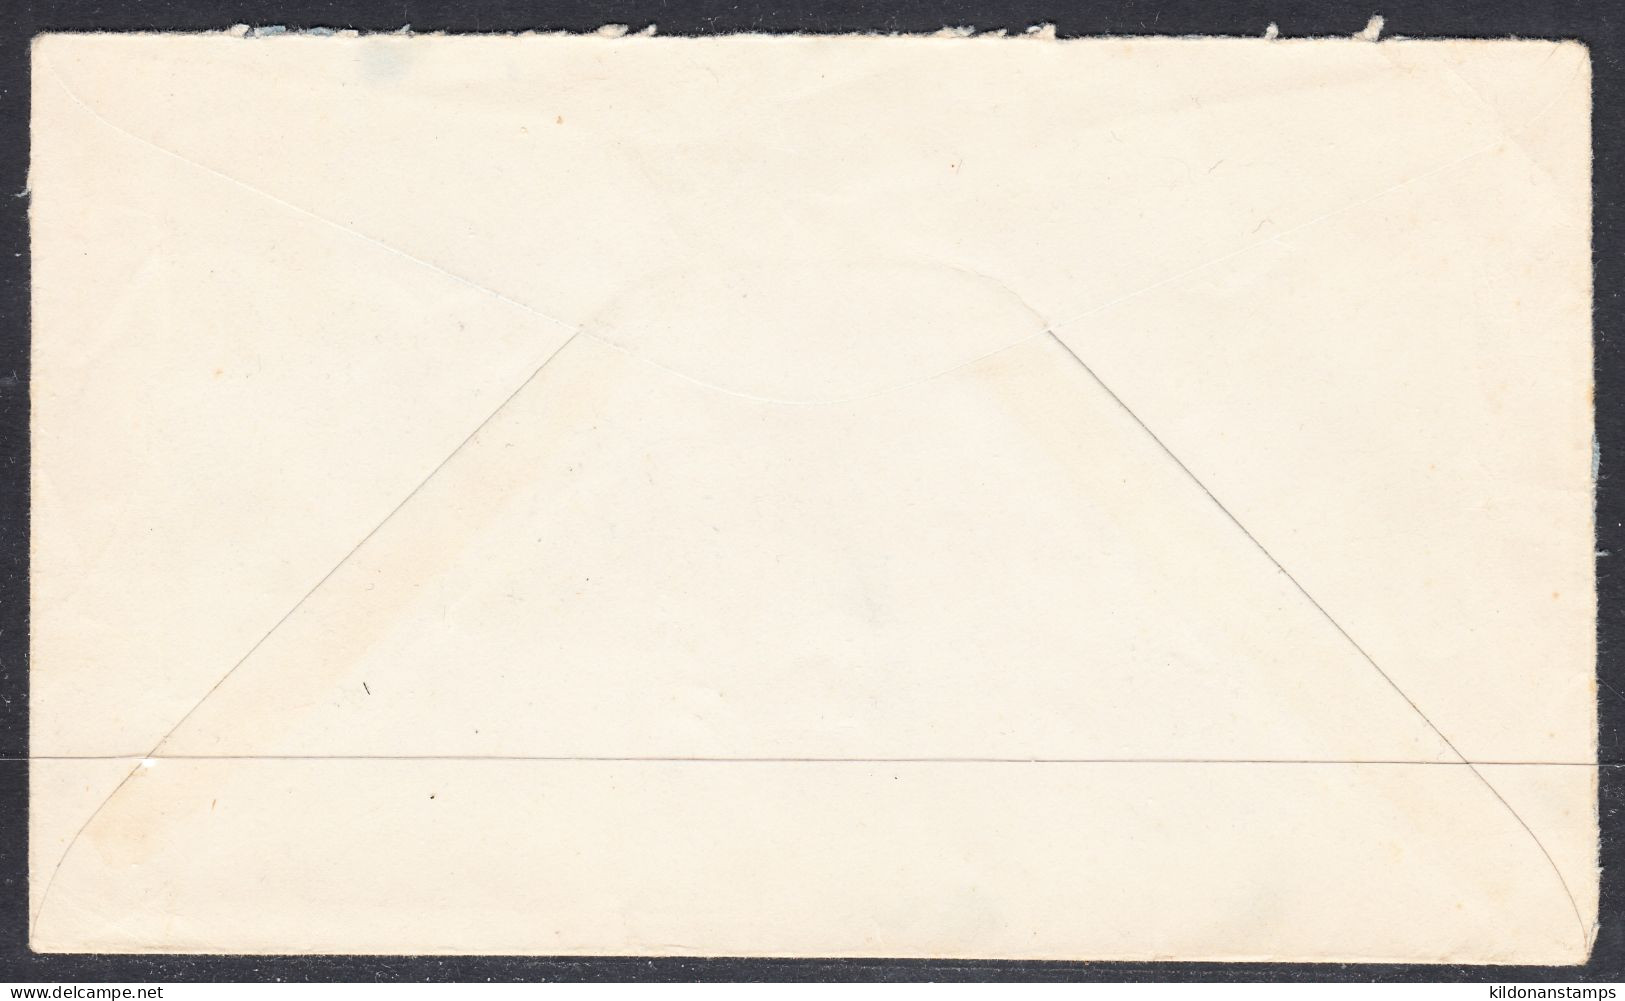 Canada Cover, Chortitz Manitoba, Feb 5 1941, A1 Broken Circle Postmark, - Briefe U. Dokumente